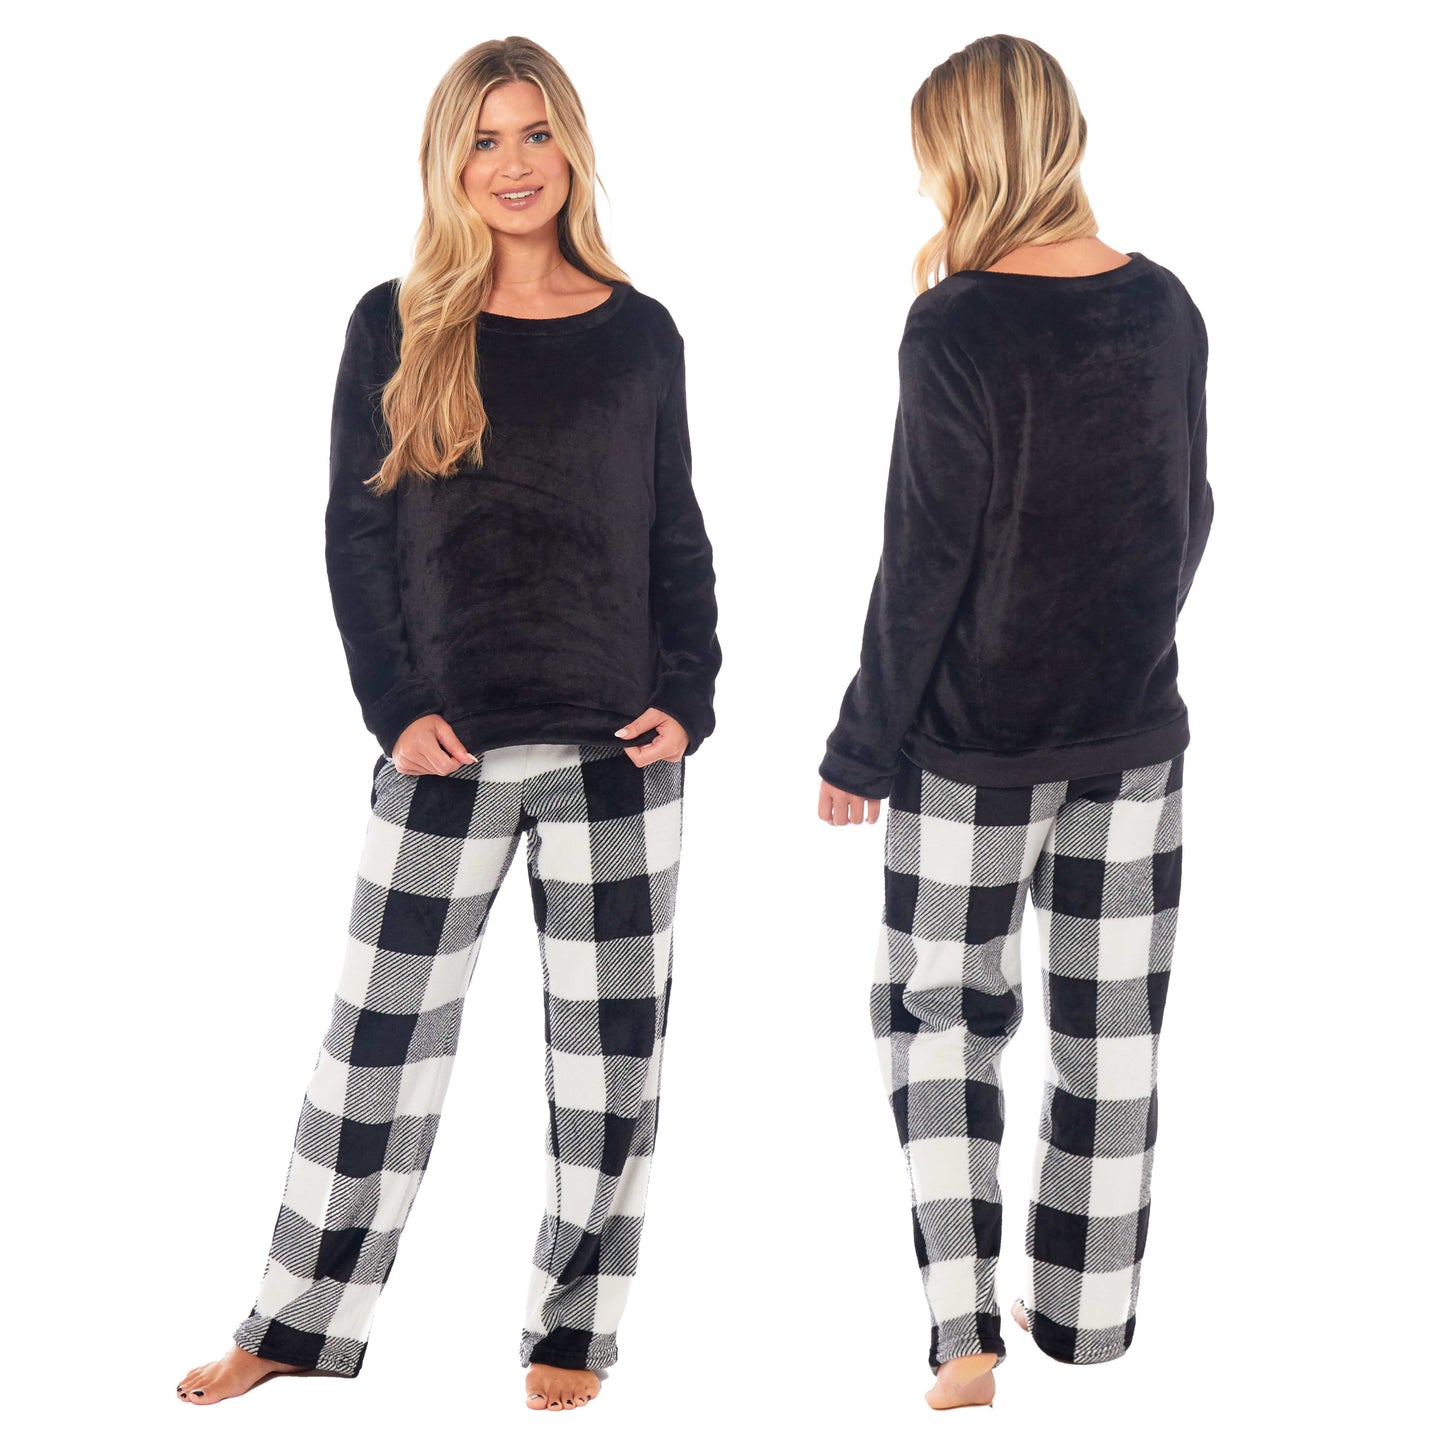 Women's Buffalo Check Fleece Pyjamas Set Long Sleeve Top & Pajama Bottoms Loungewear Daisy Dreamer Pyjamas